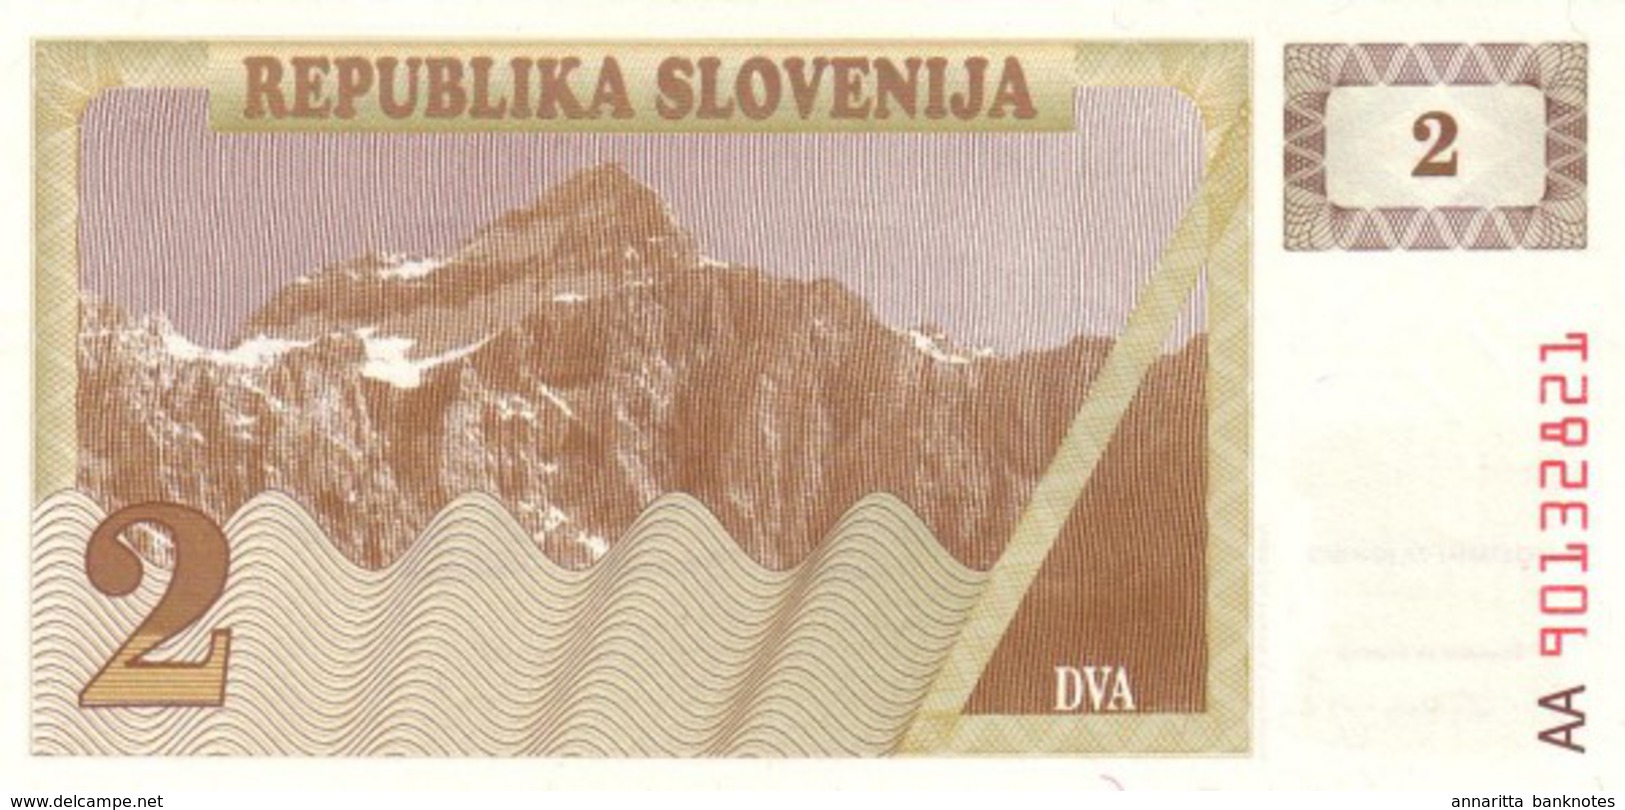 Slovenia 2 Tolarjev ND (1990), UNC (P-2a, B-202a) - Slovenia